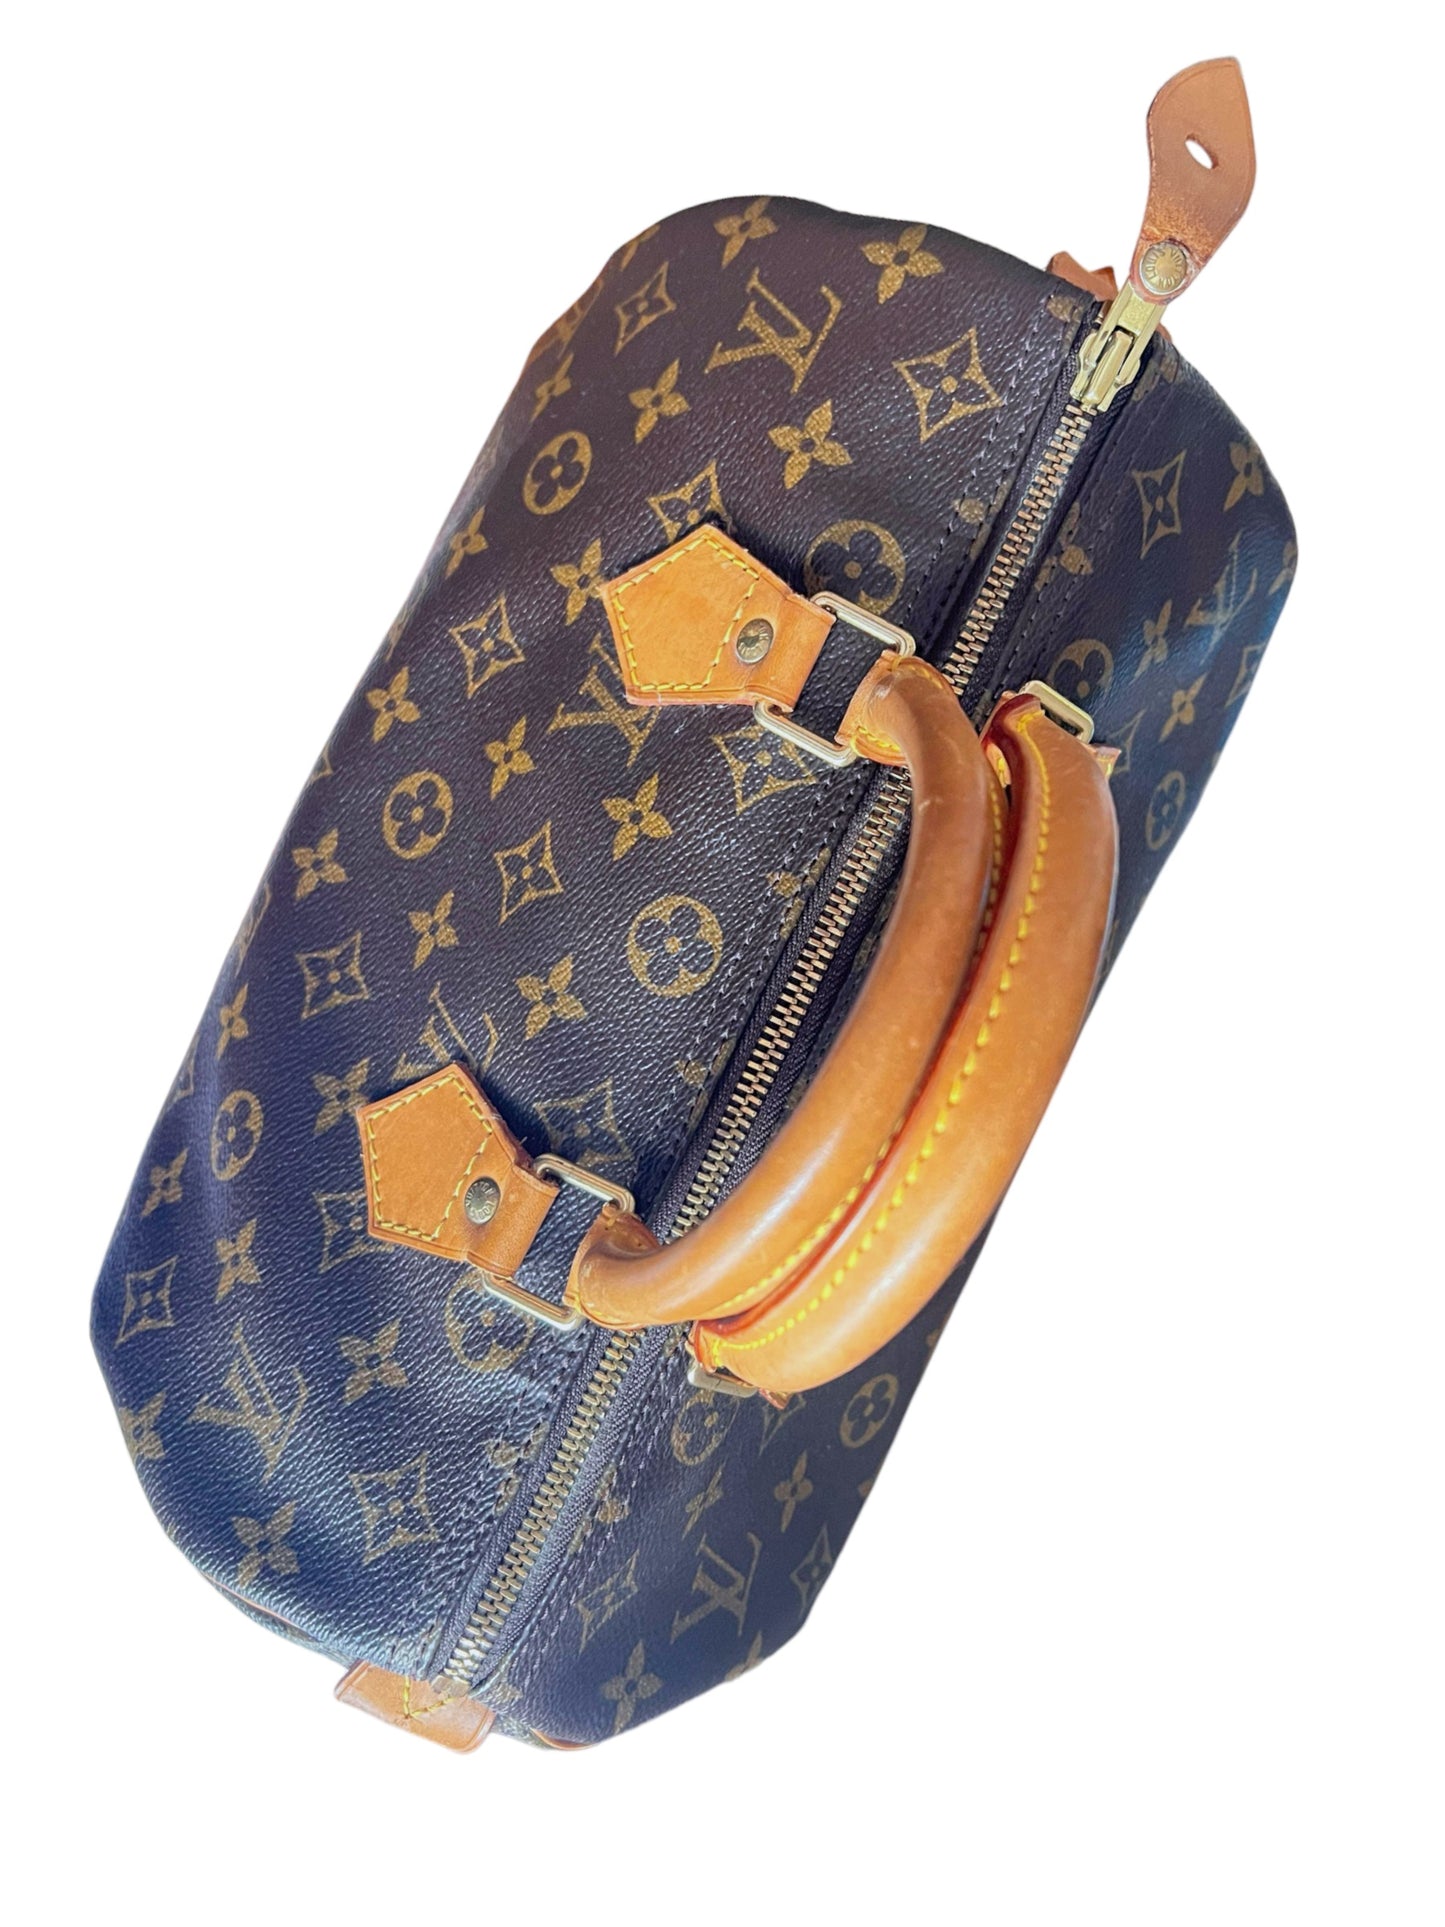 Louis Vuitton Speedy 30 Monogram Bag